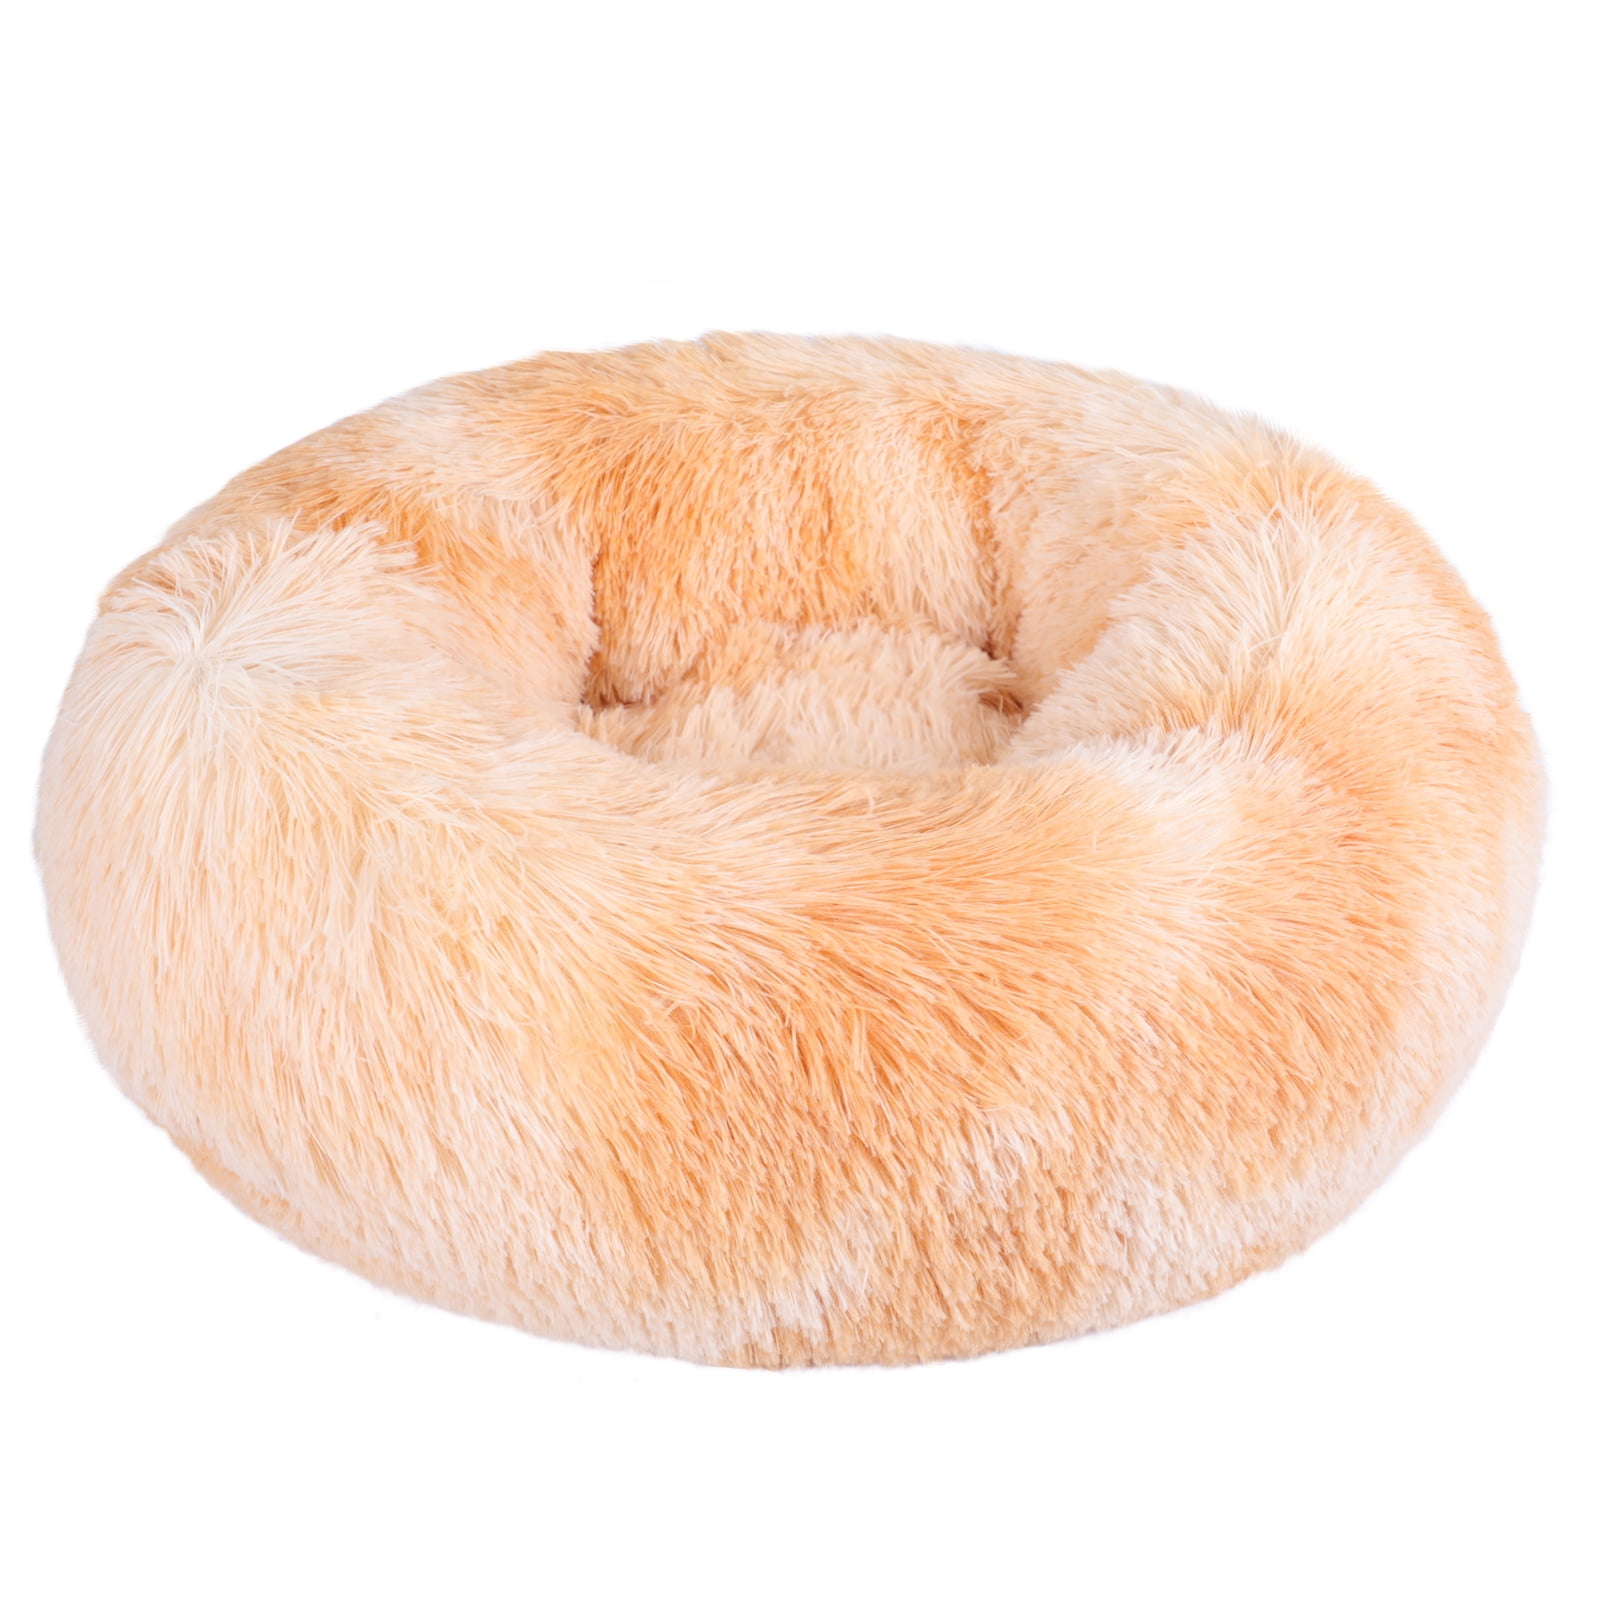 Pet Dog Cat Calming Bed Round Nest Warm Soft Plush Comfy Sofa Pet Sleeping US 